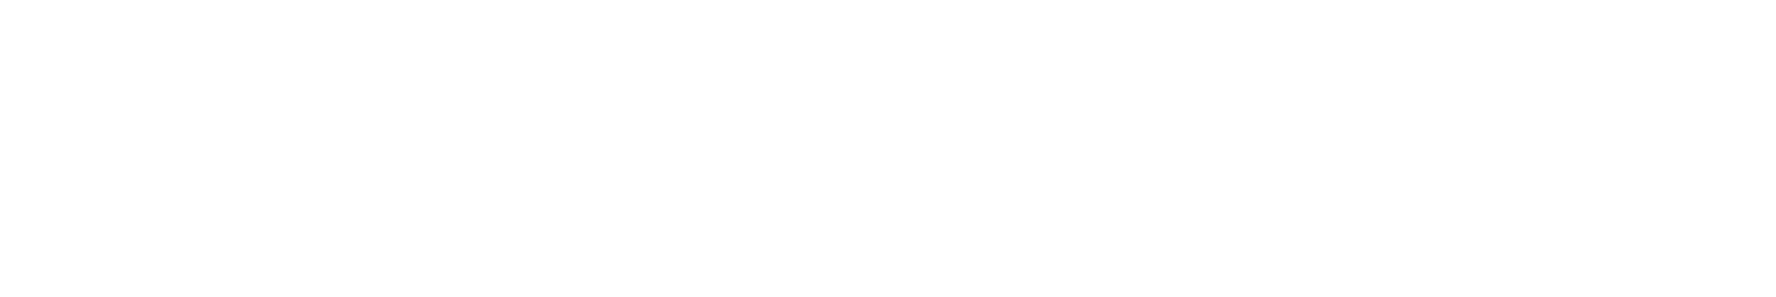 Dallas Regional Chamber logo